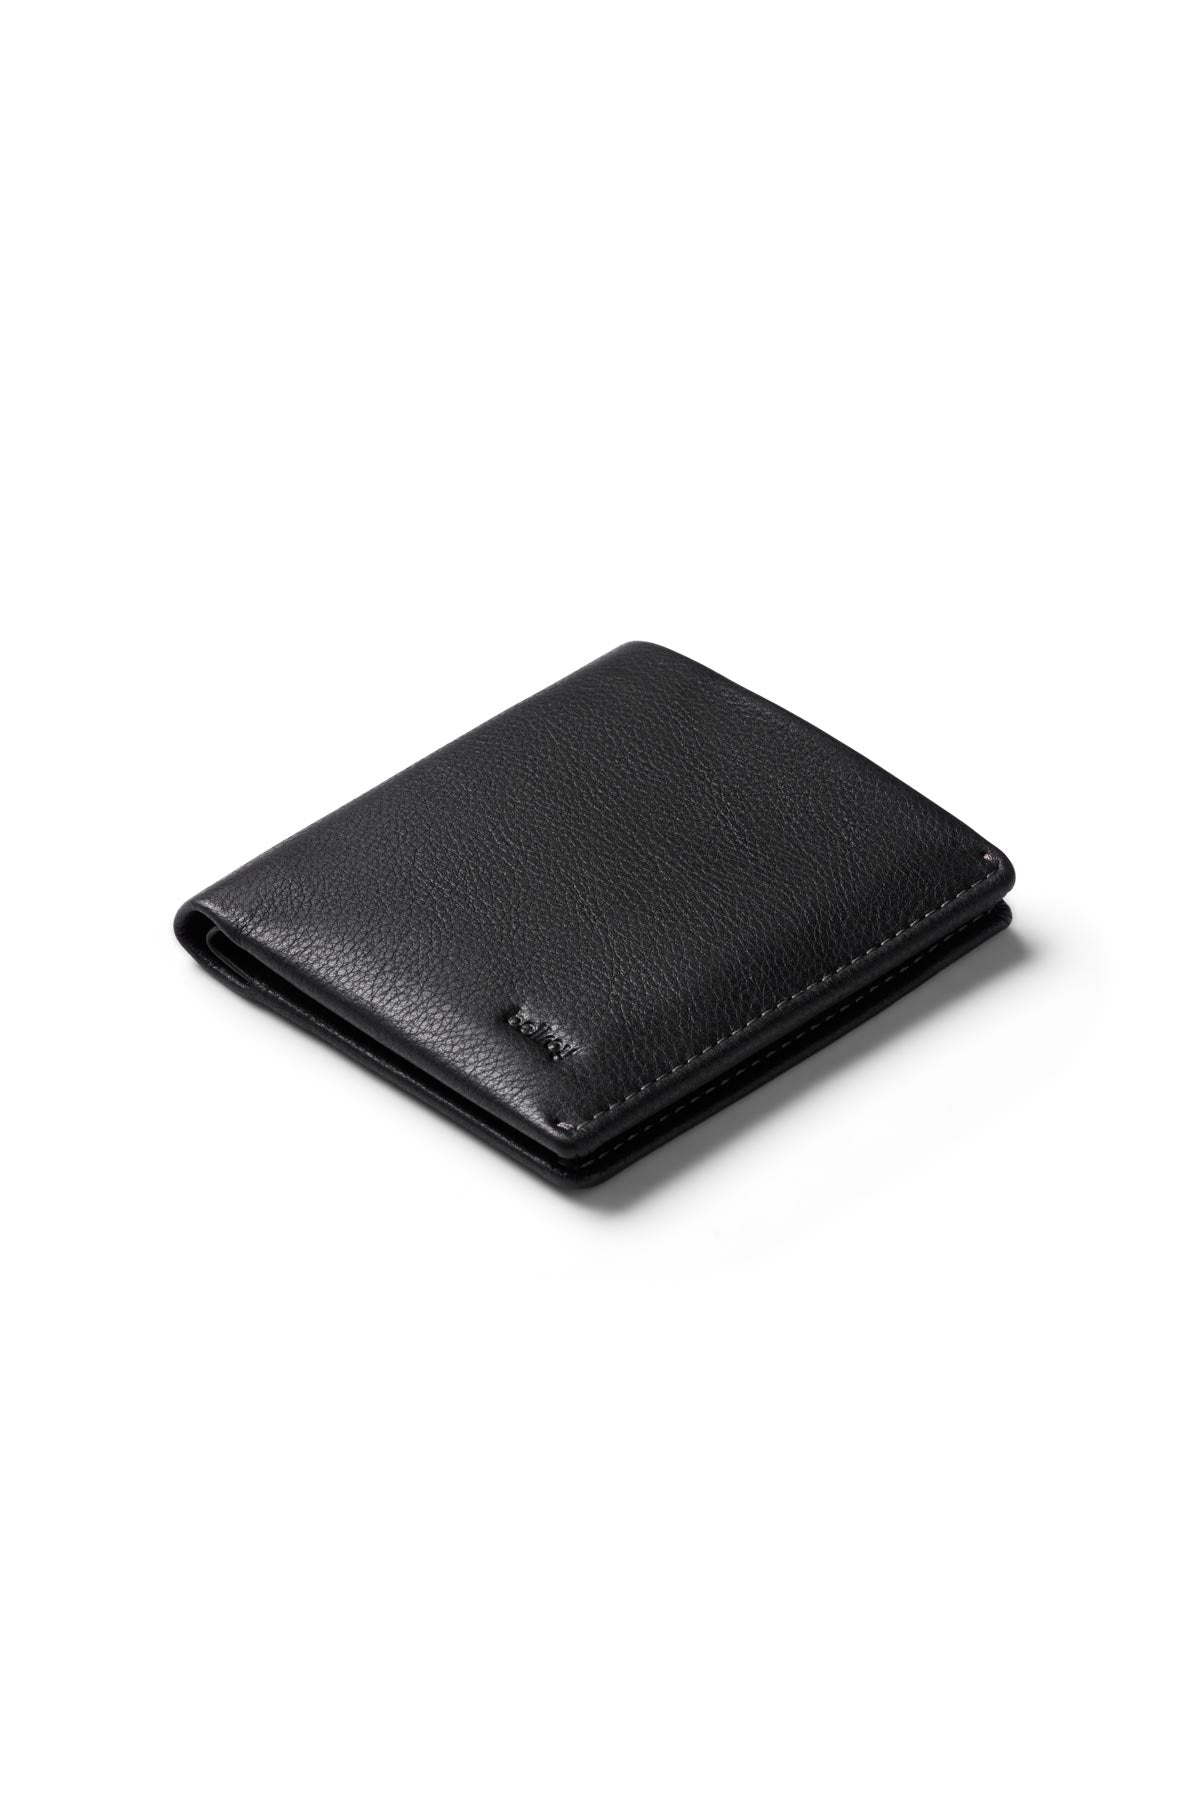 Bellroy - RFID Note Sleeve Wallet - Obsidian